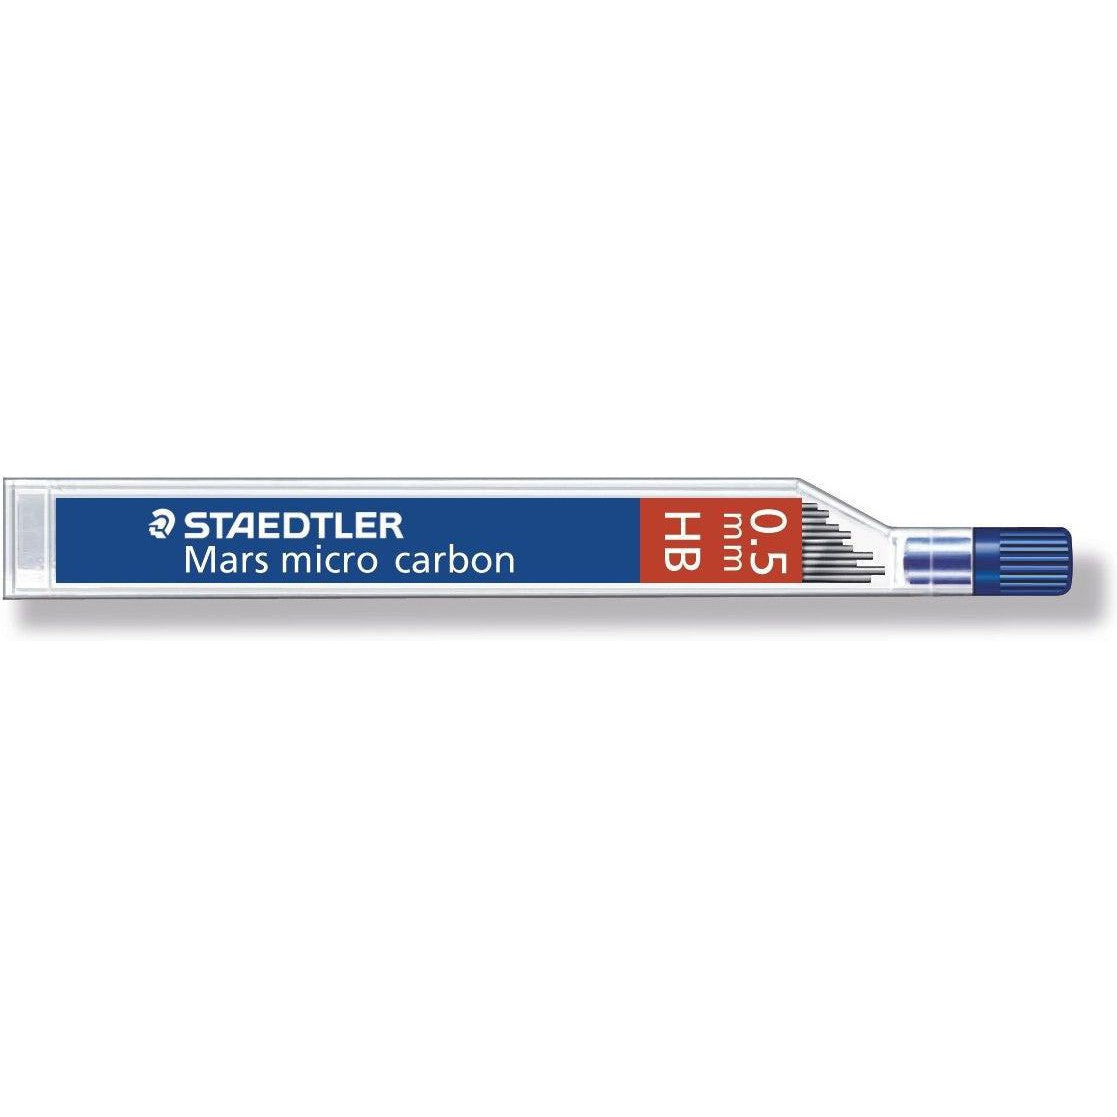 Staedtler	Mars Micro Carbon St-250 Leads-School Supplies-Staedtler-Star Light Kuwait